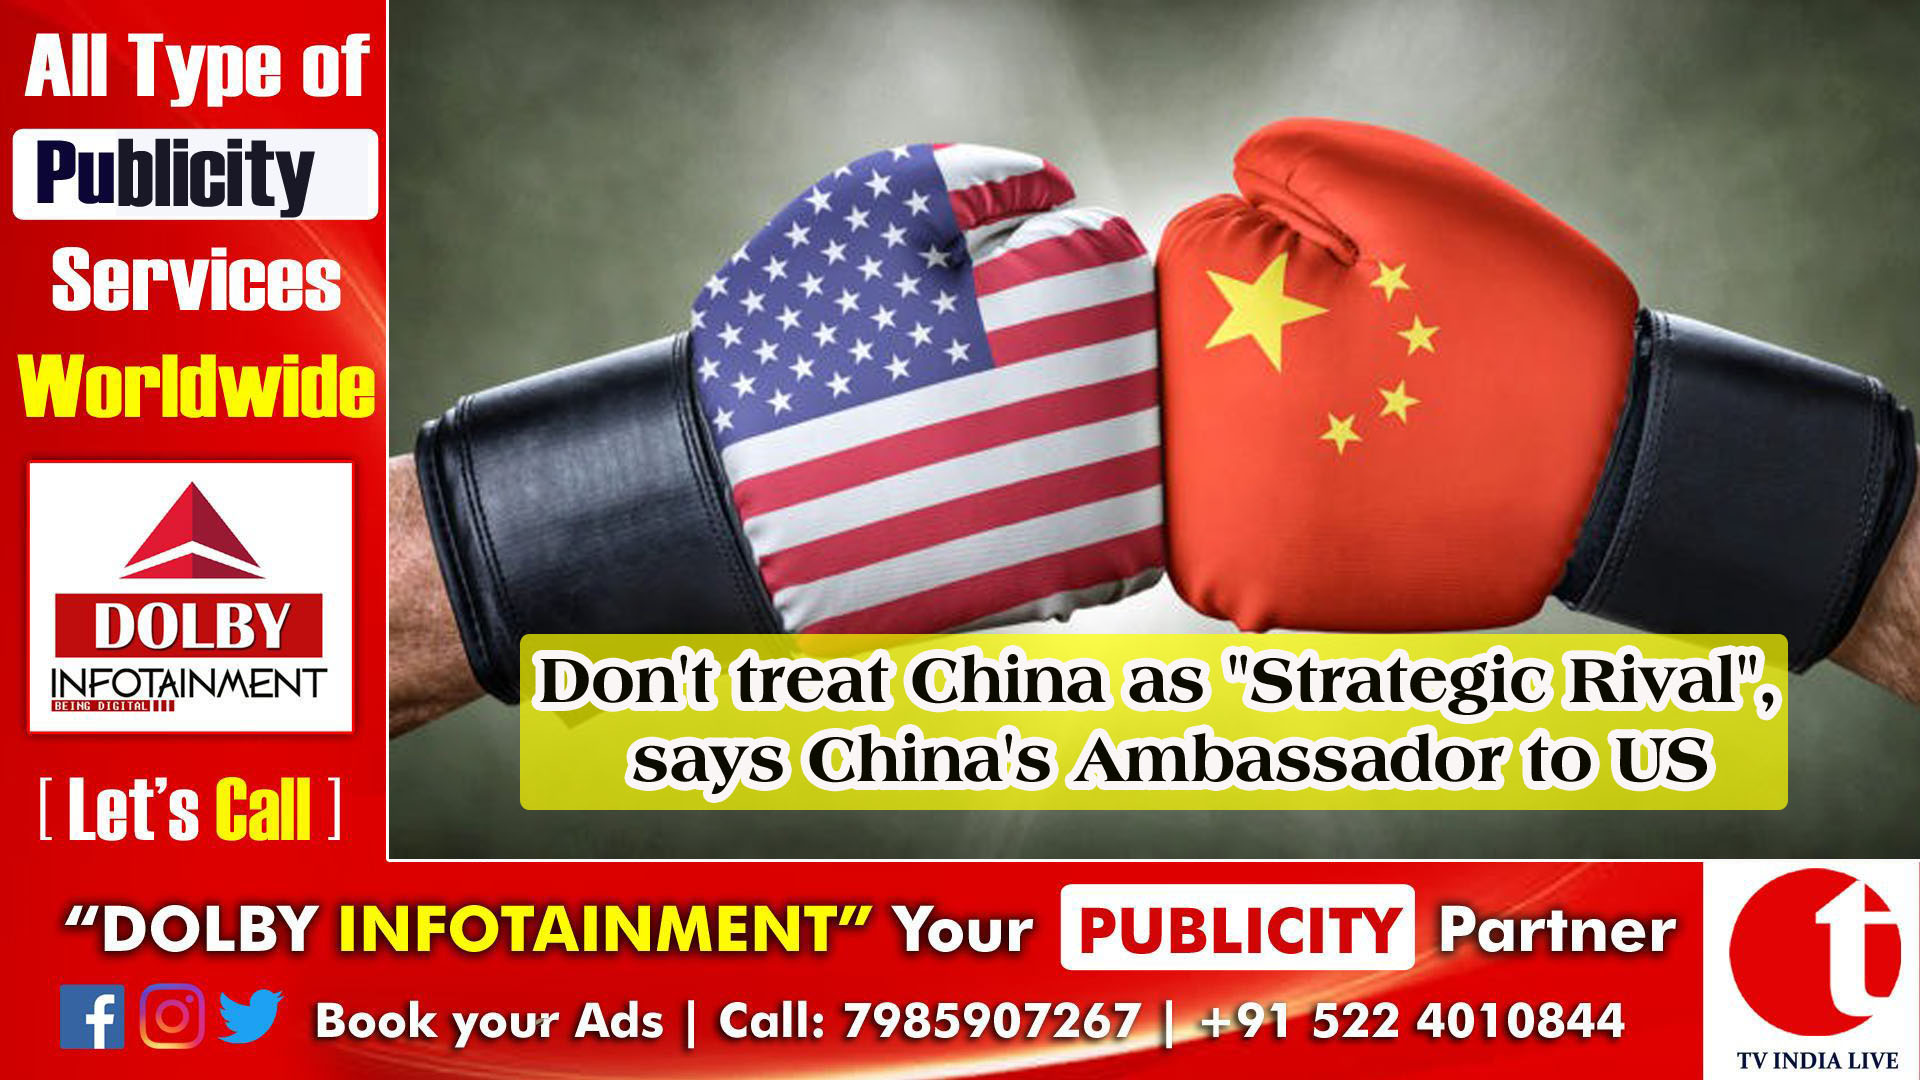 Don't treat China as "Strategic Rival", says China's Ambassador to US